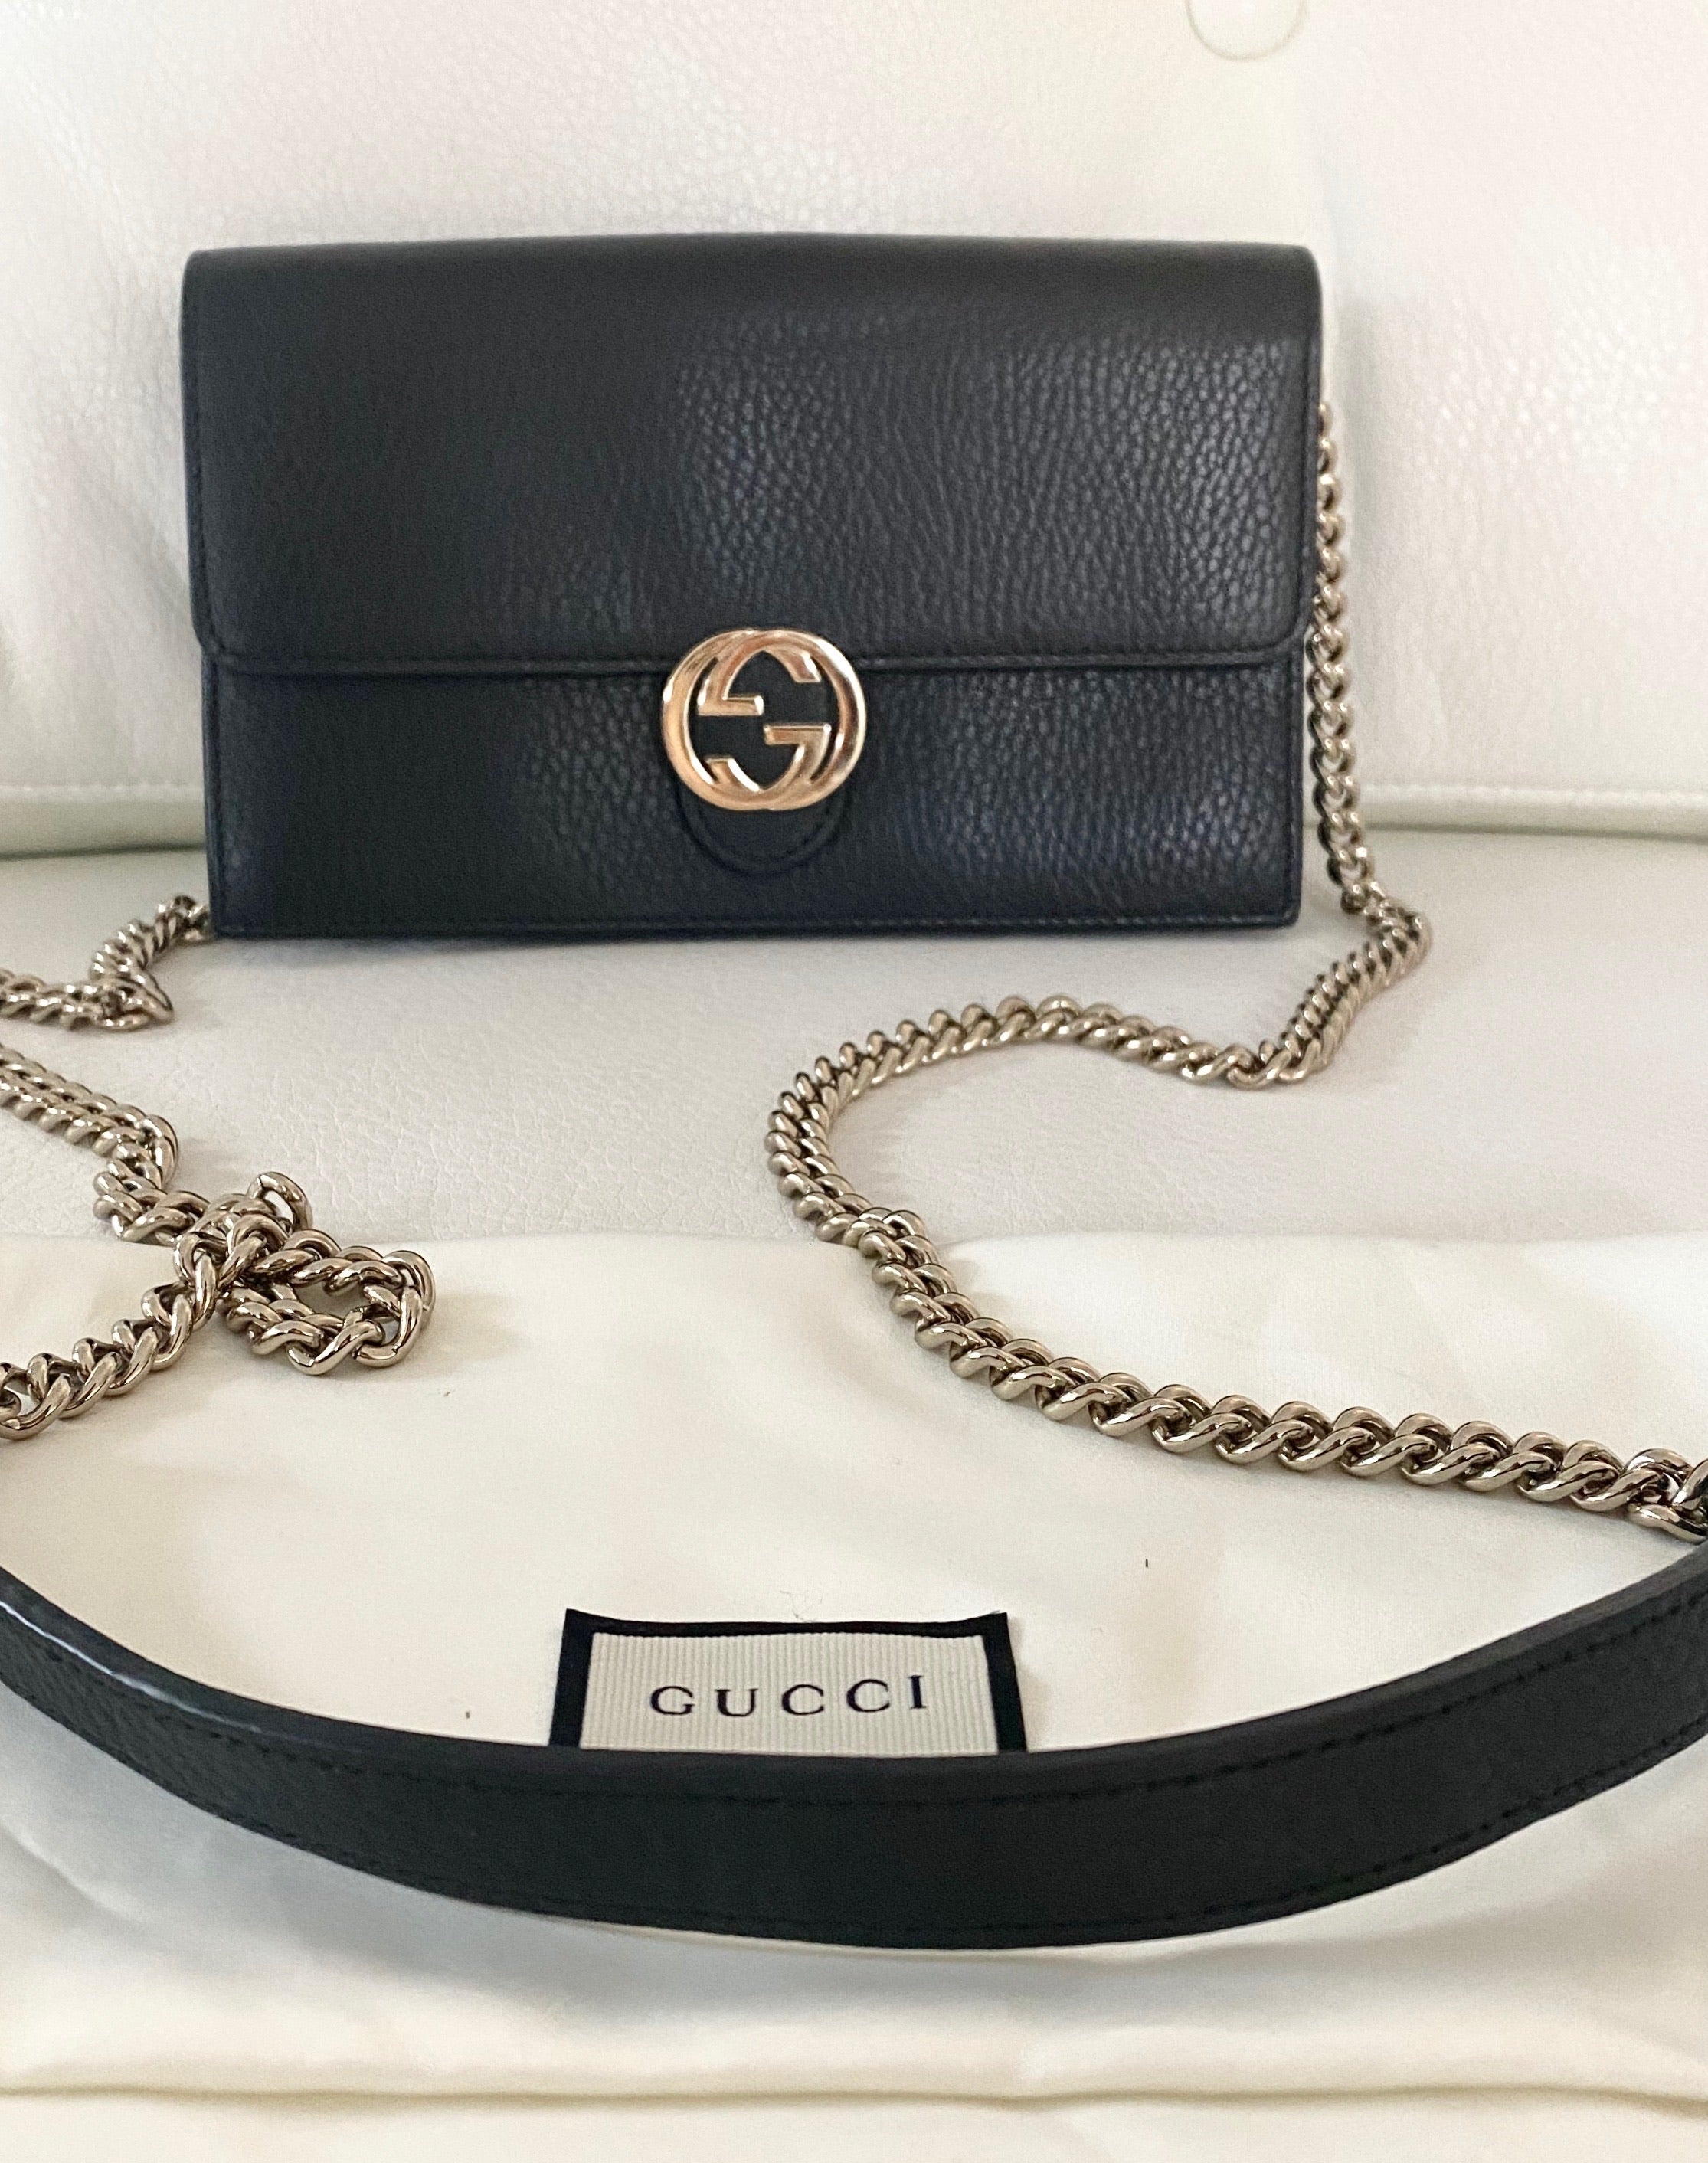 Gucci Interlock Wallet on a Chain